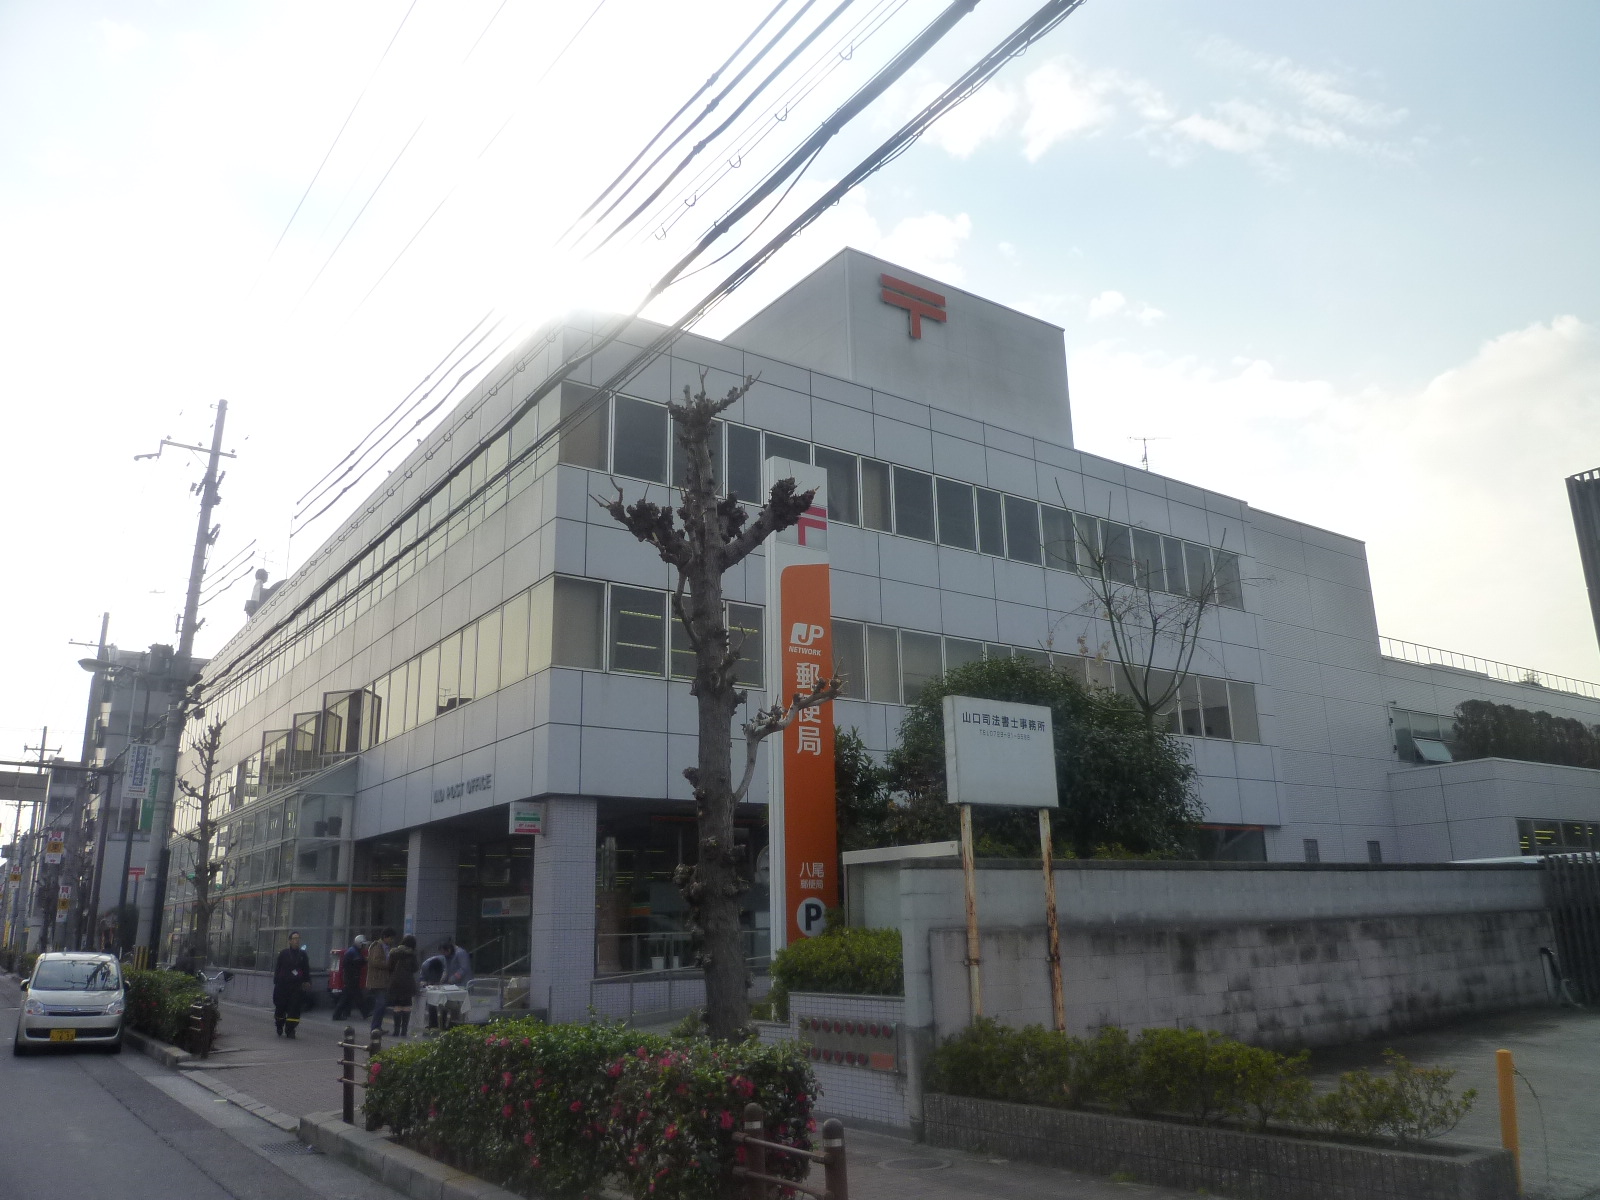 Bank. 736m to Japan Post Bank Yao store (Bank)